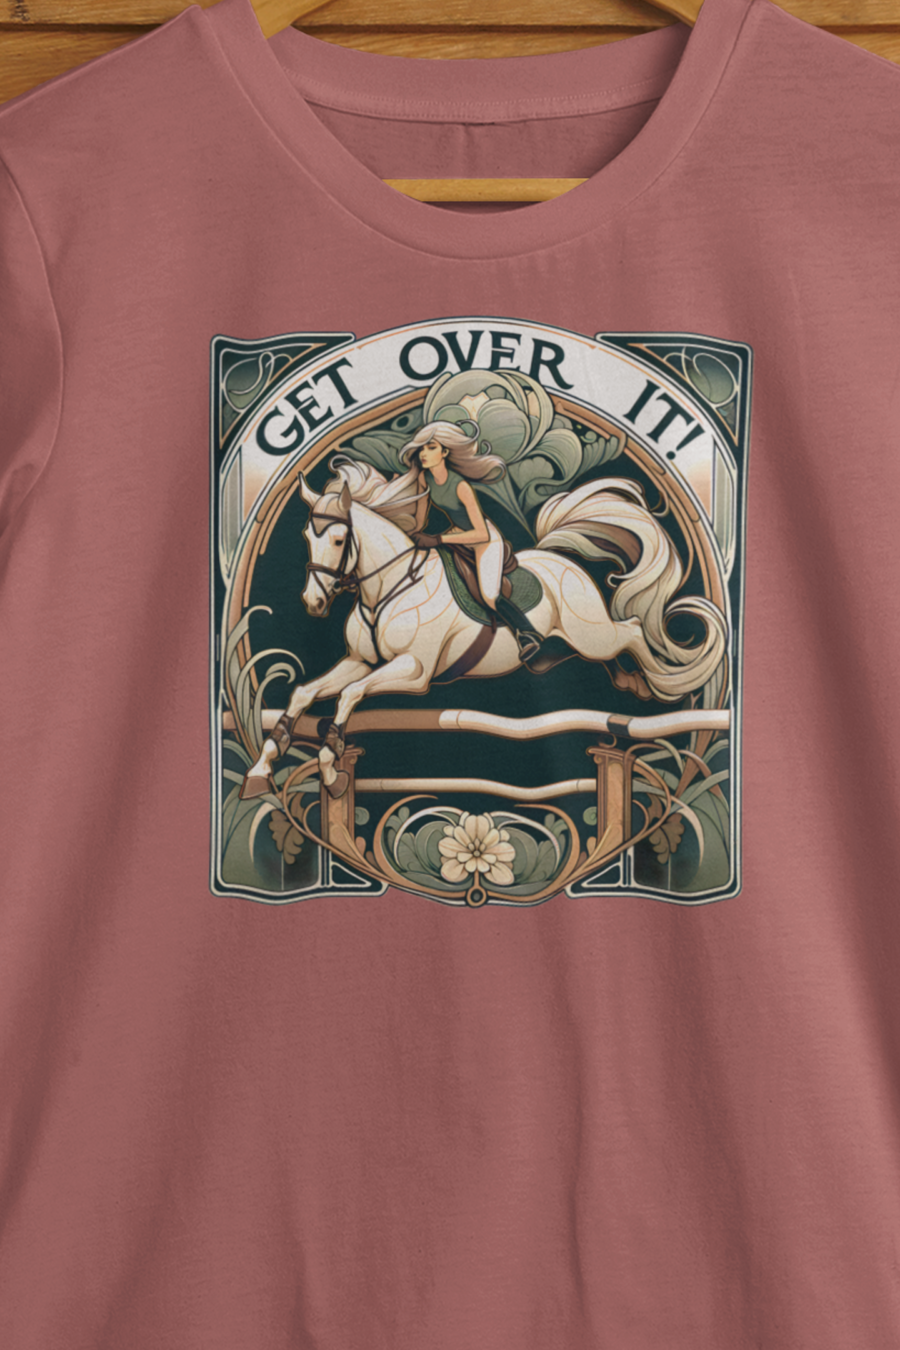 Jumper Horse T-Shirt "Get Over It!